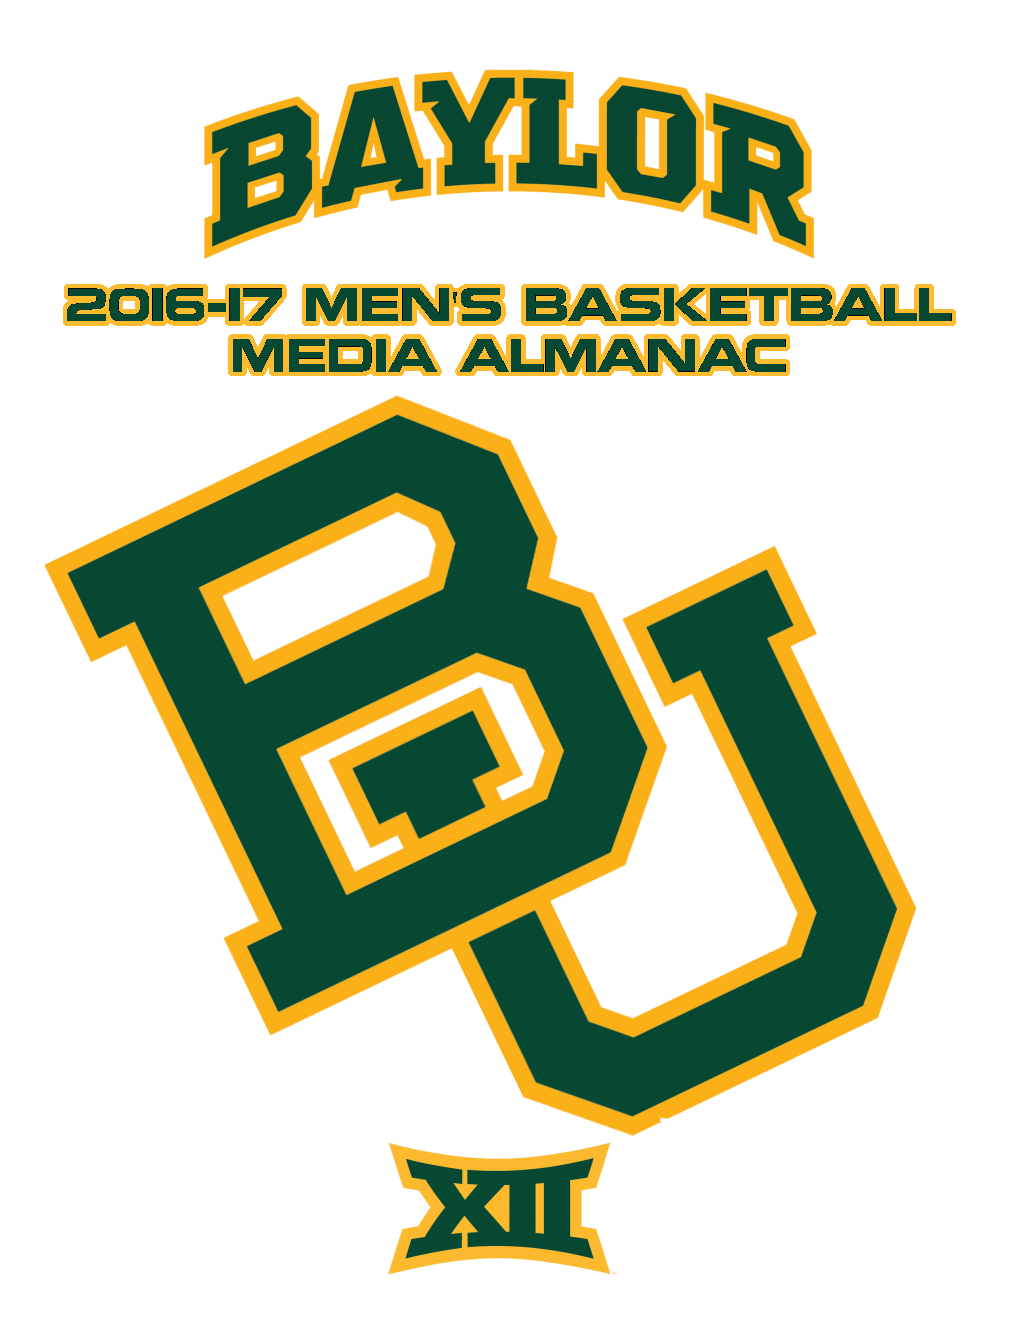 2016-17 Baylor Men's Basketball Media Almanac